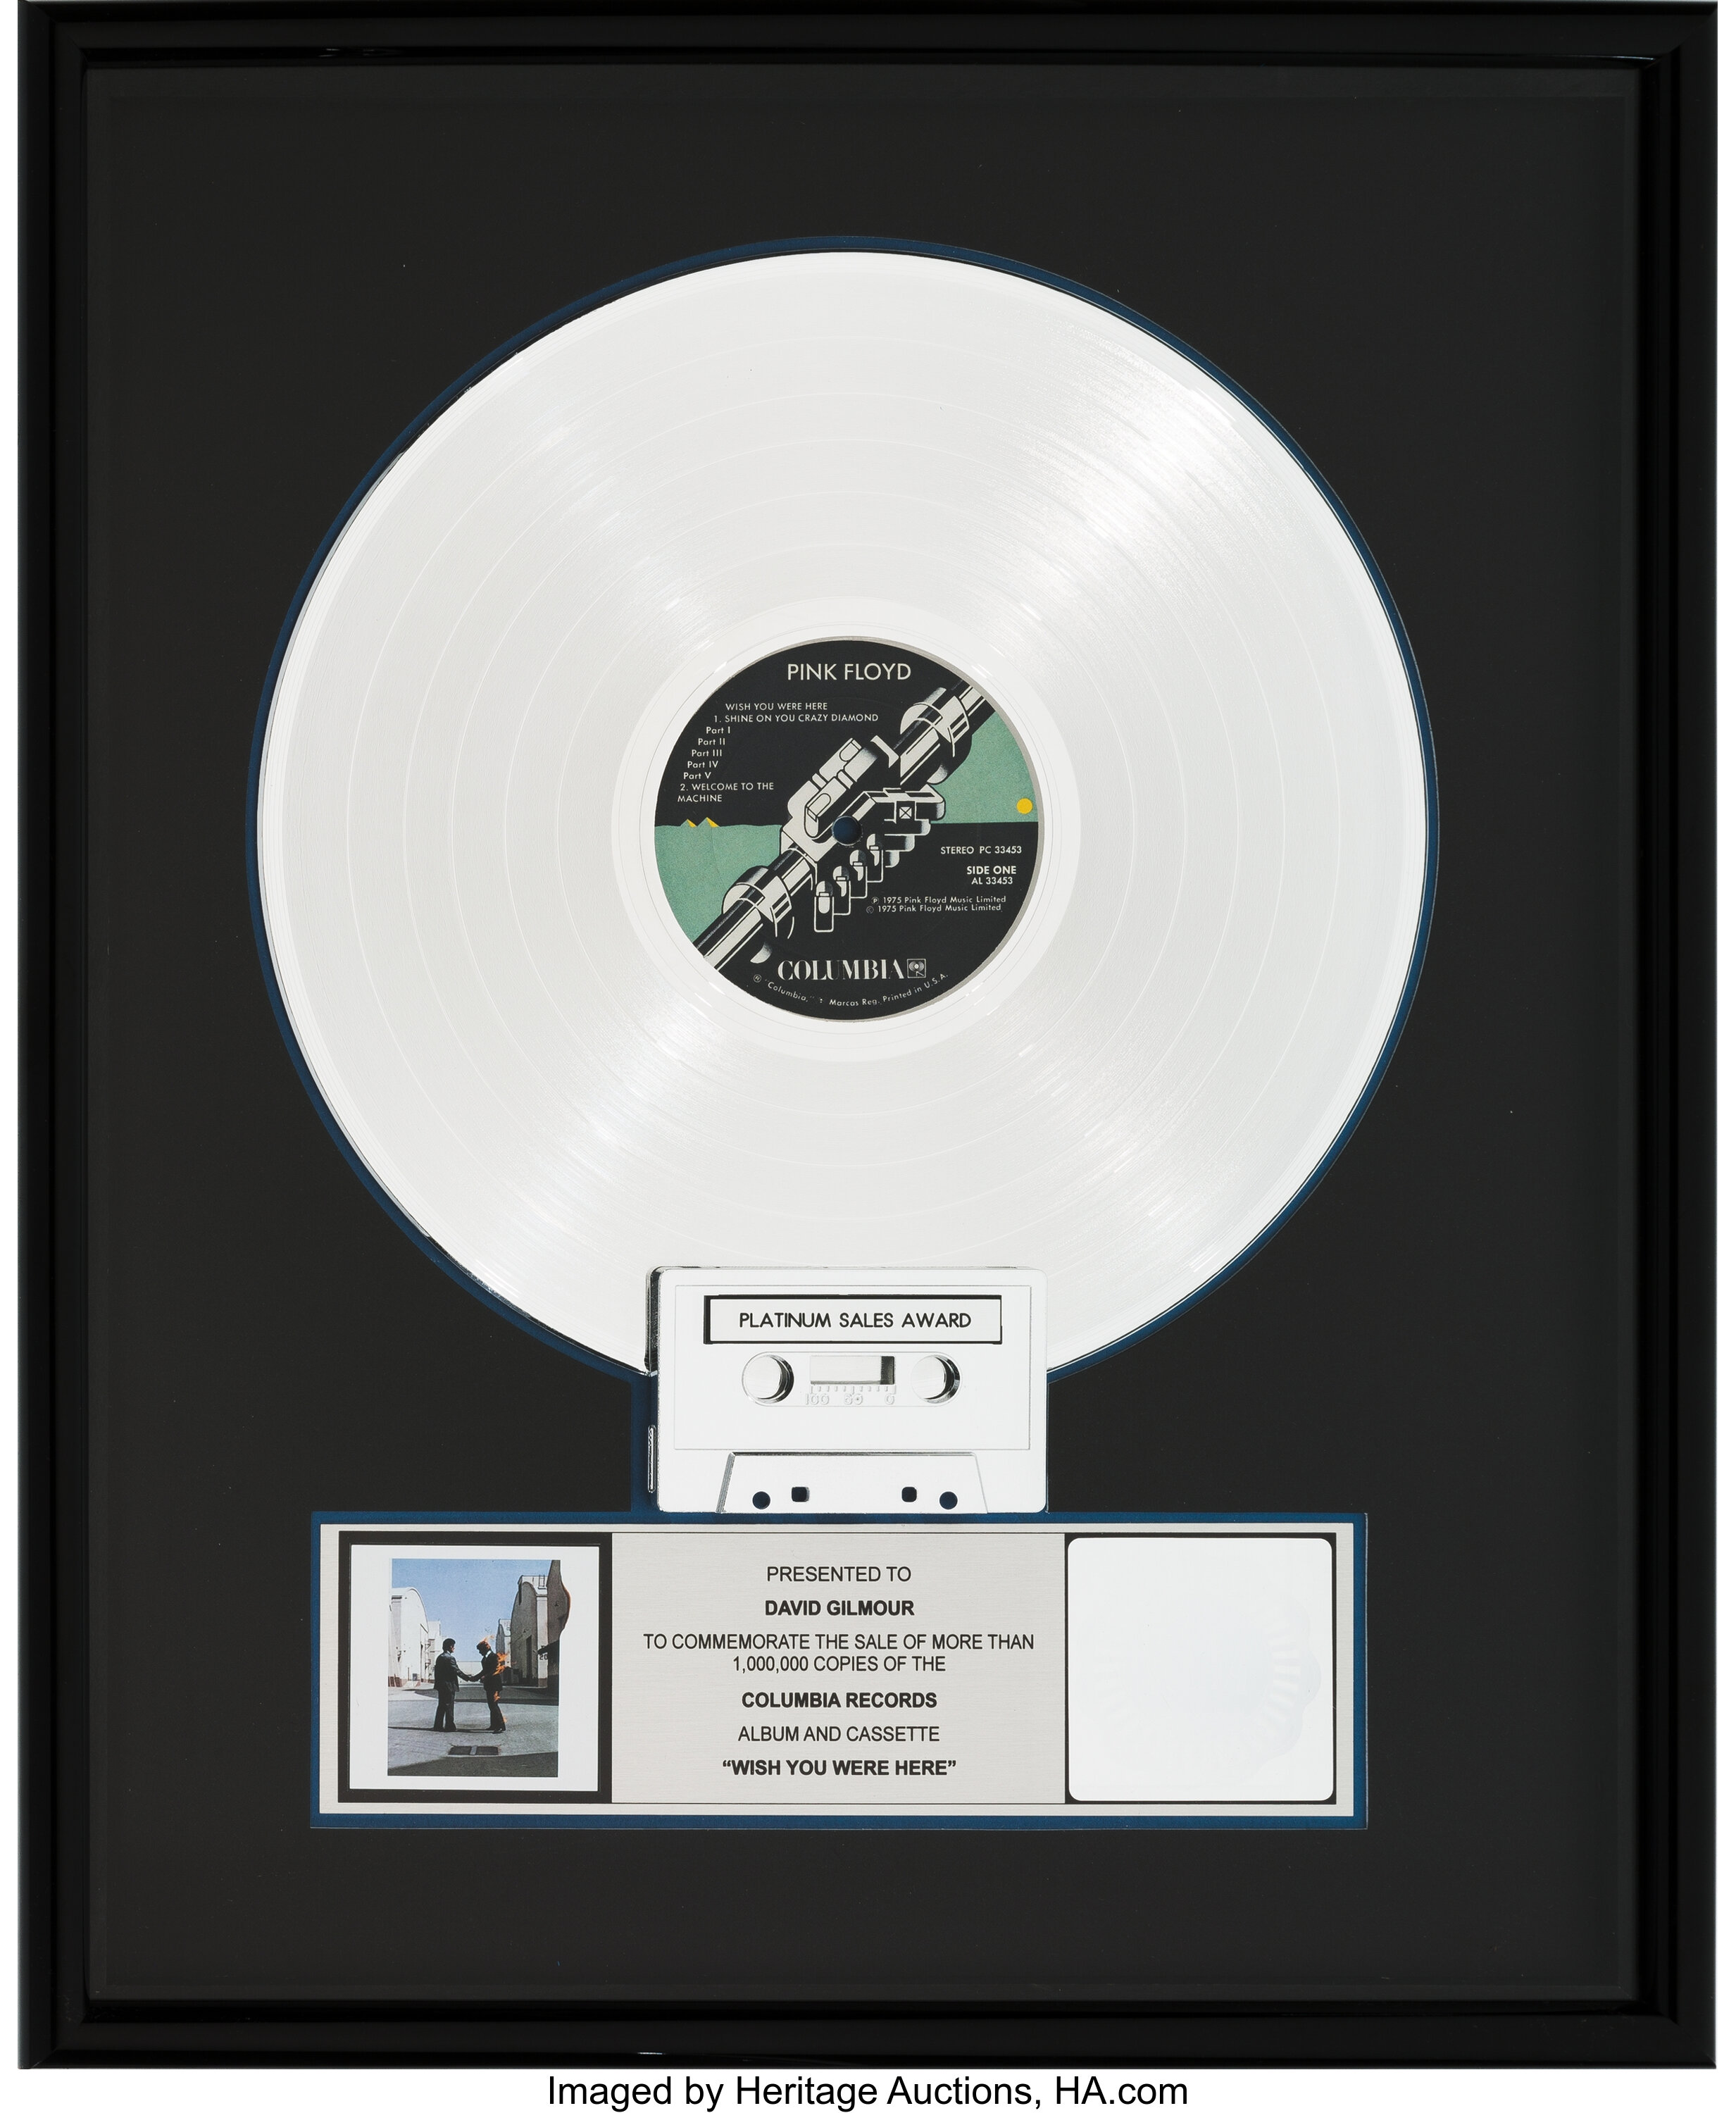 Pink Floyd Wish You Were Here Riaa Platinum Album Award Columbia Lot 471 Heritage Auctions